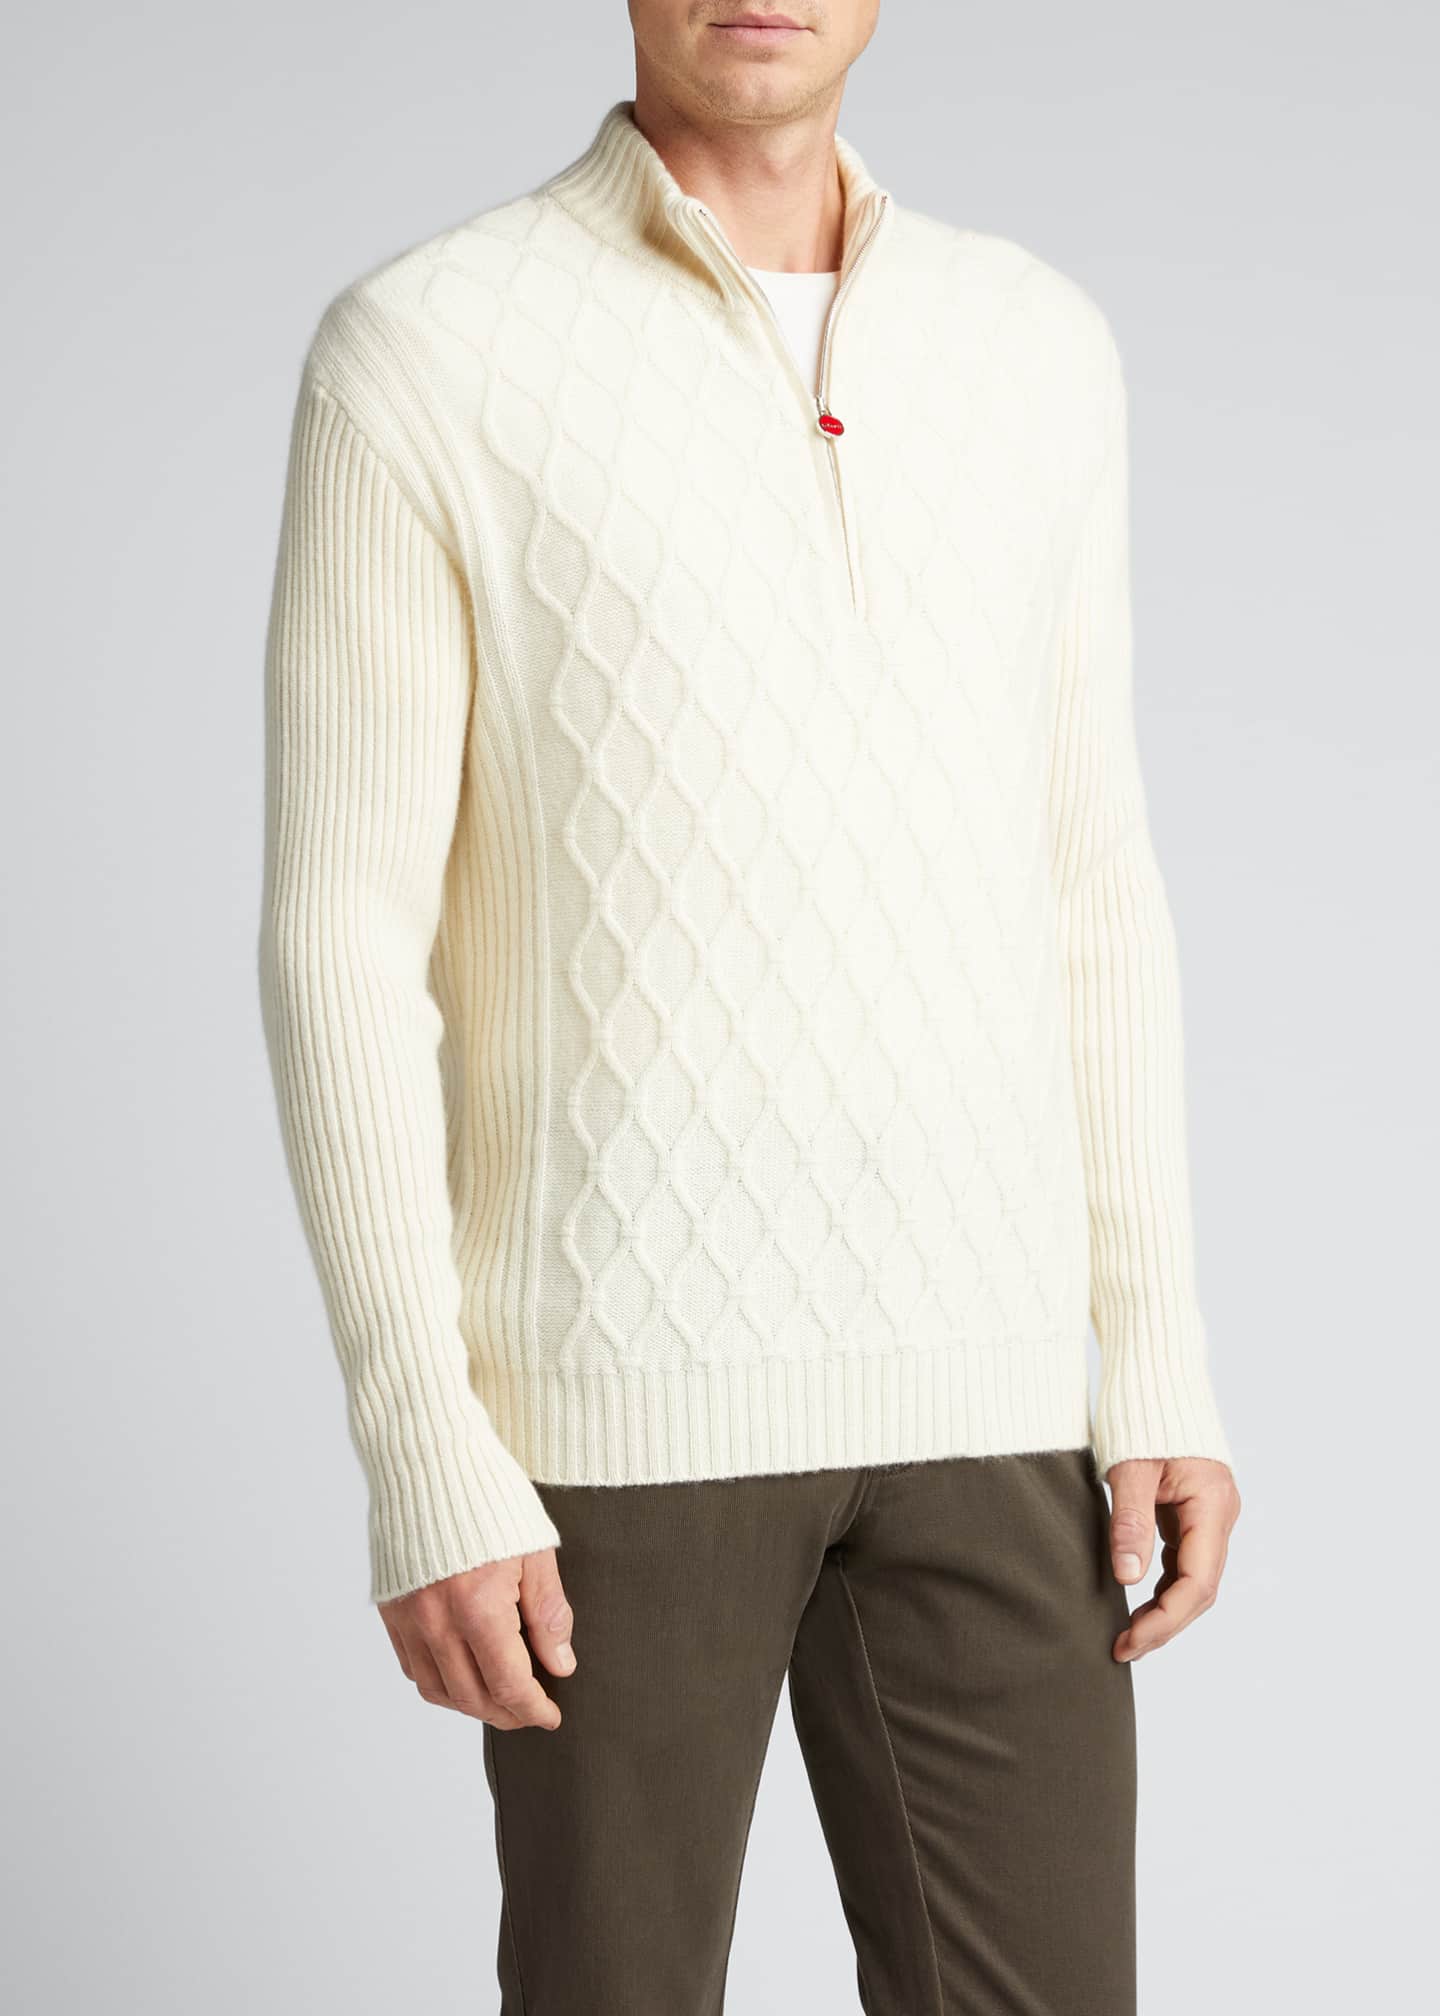 Kiton Men's Quilted Cashmere Quarter-Zip Sweater - Bergdorf Goodman